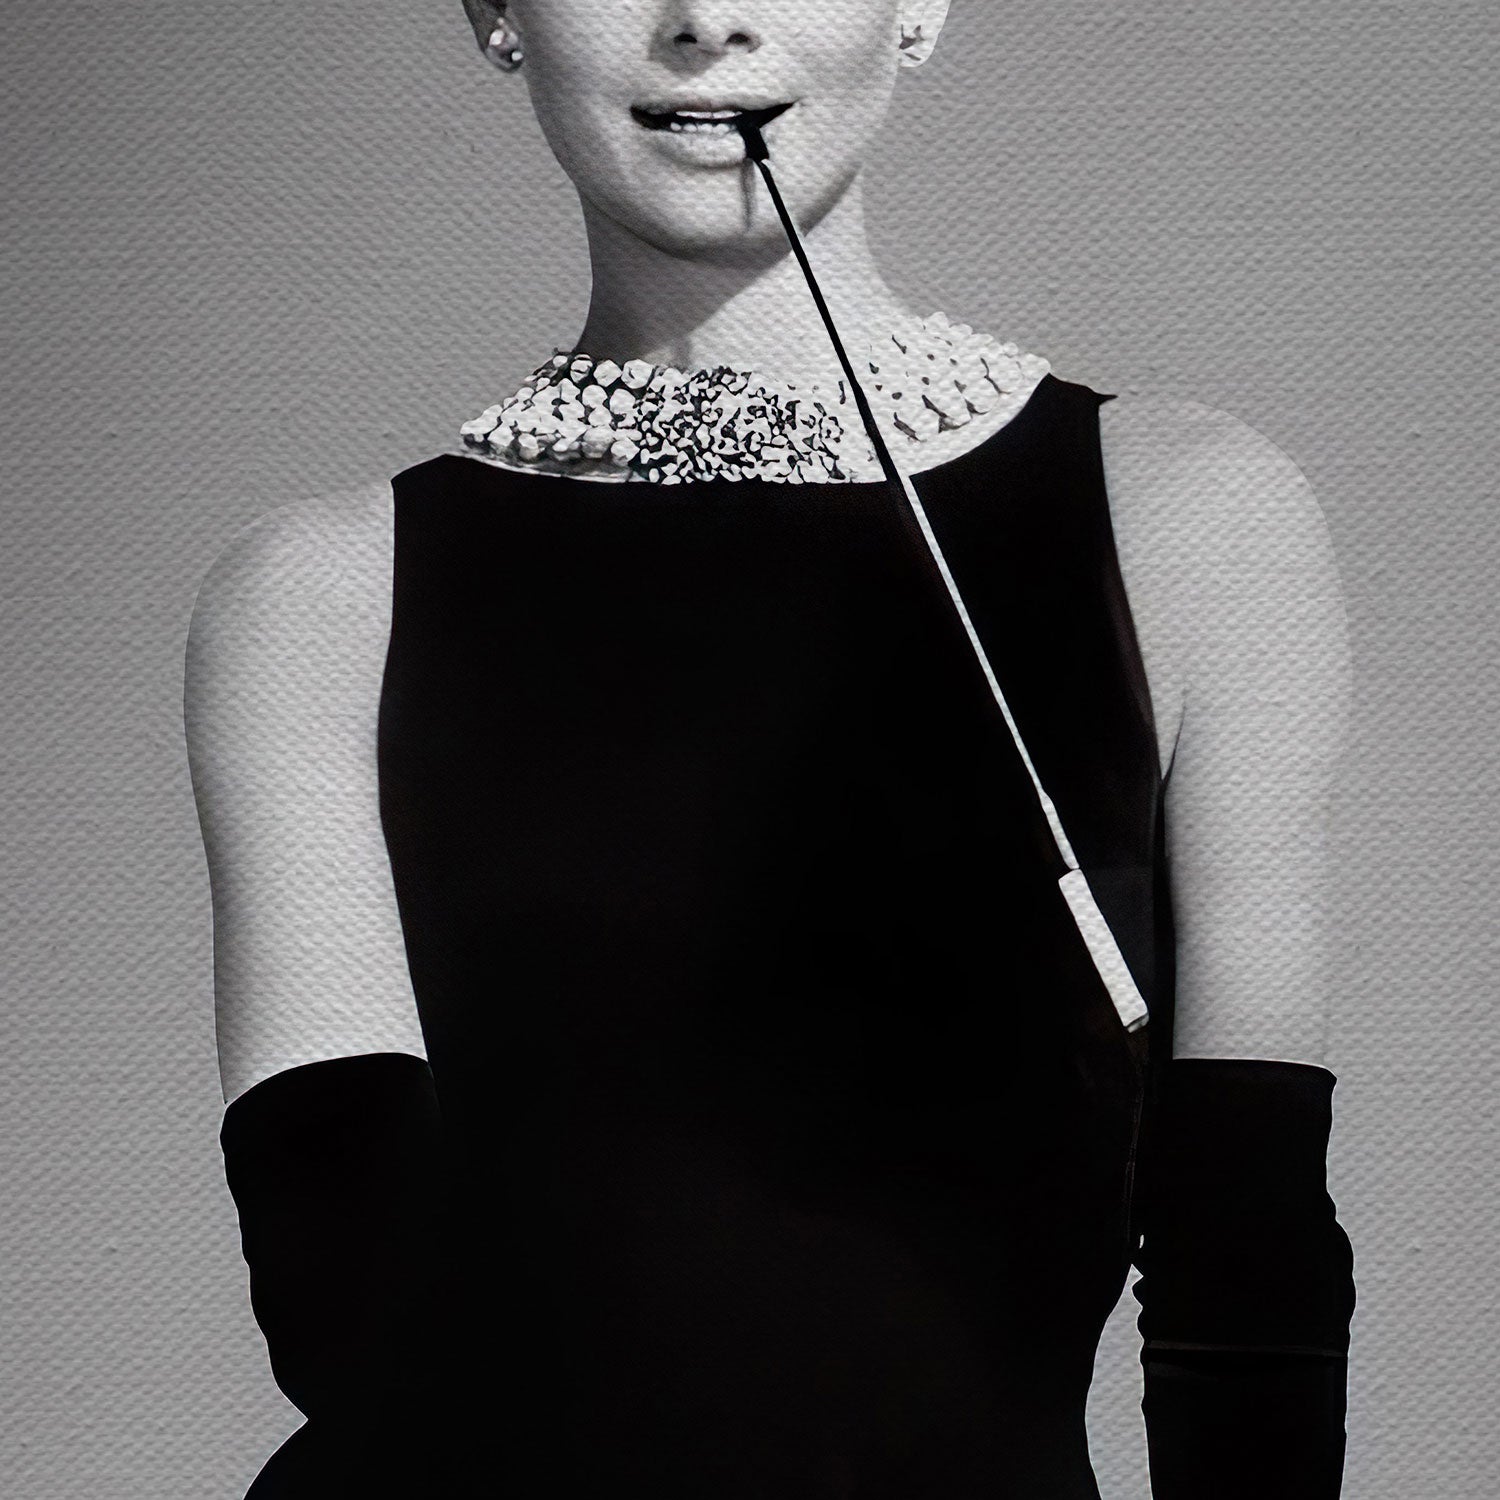 Audrey Hepburn Black Dress Canvas Wall Art